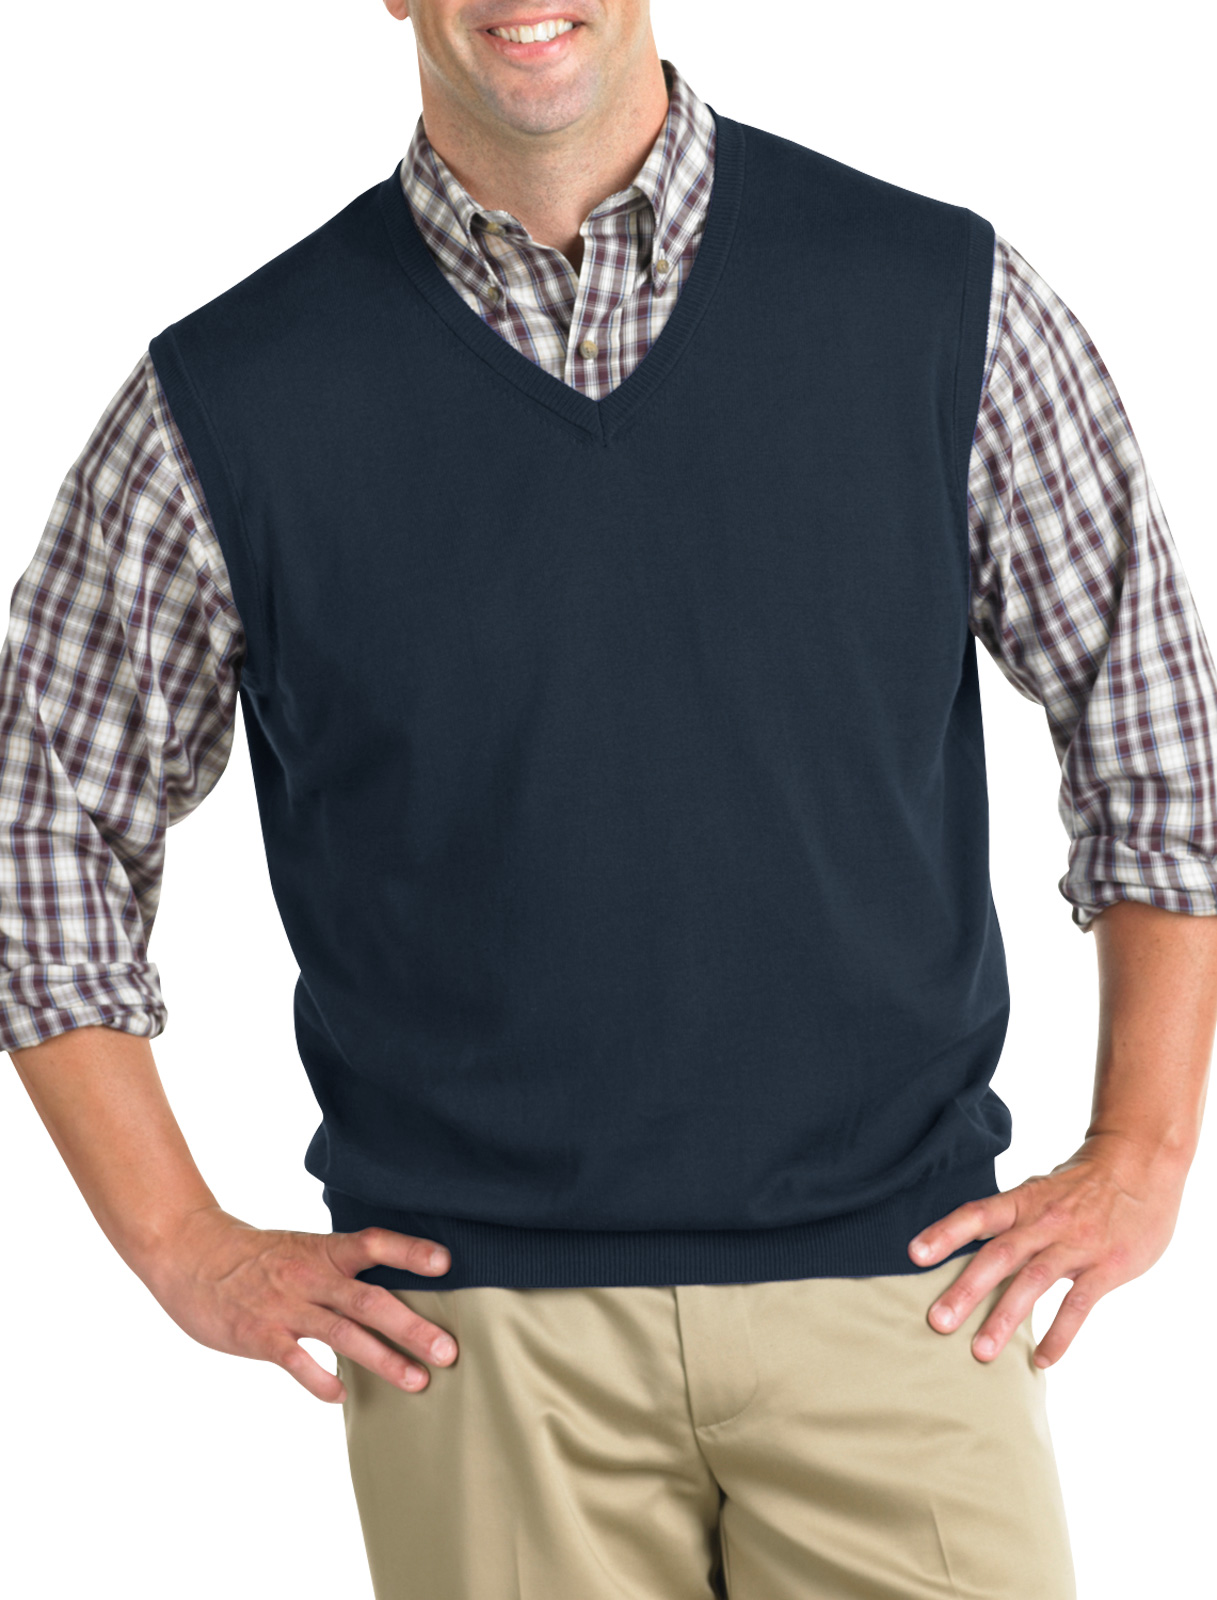 Harbor Bay Men's Big and Tall V-Neck Sweater Vest